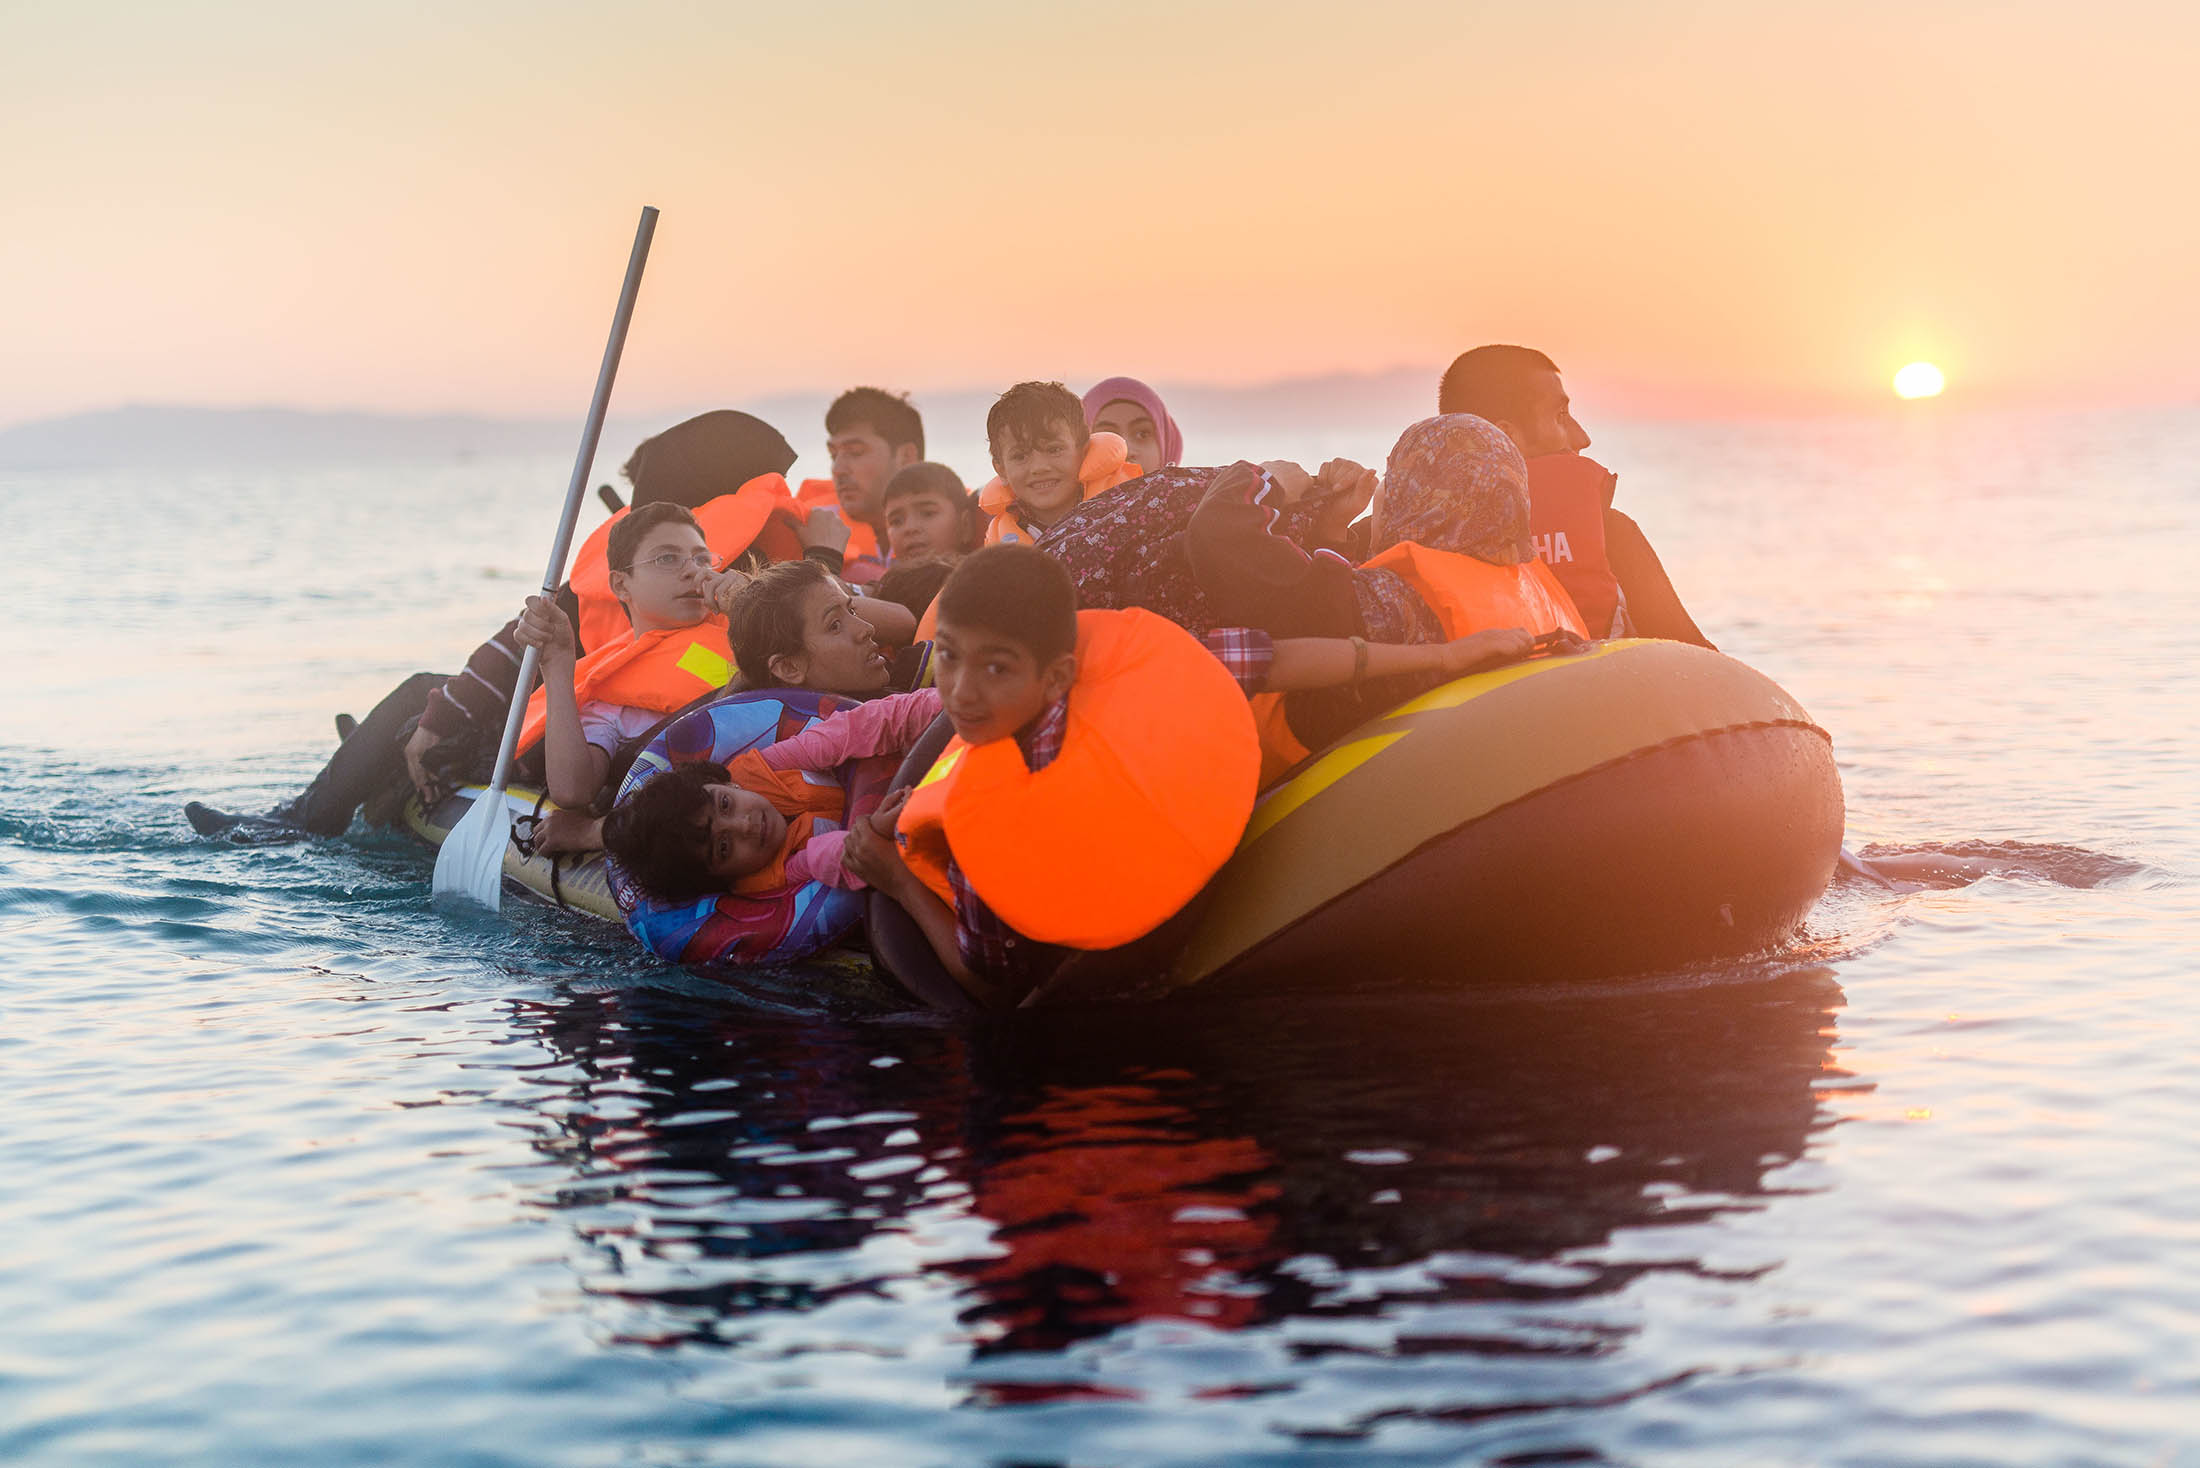 Syrian refugees land on the Greek island of Kos on Aug. 30, 2015.
